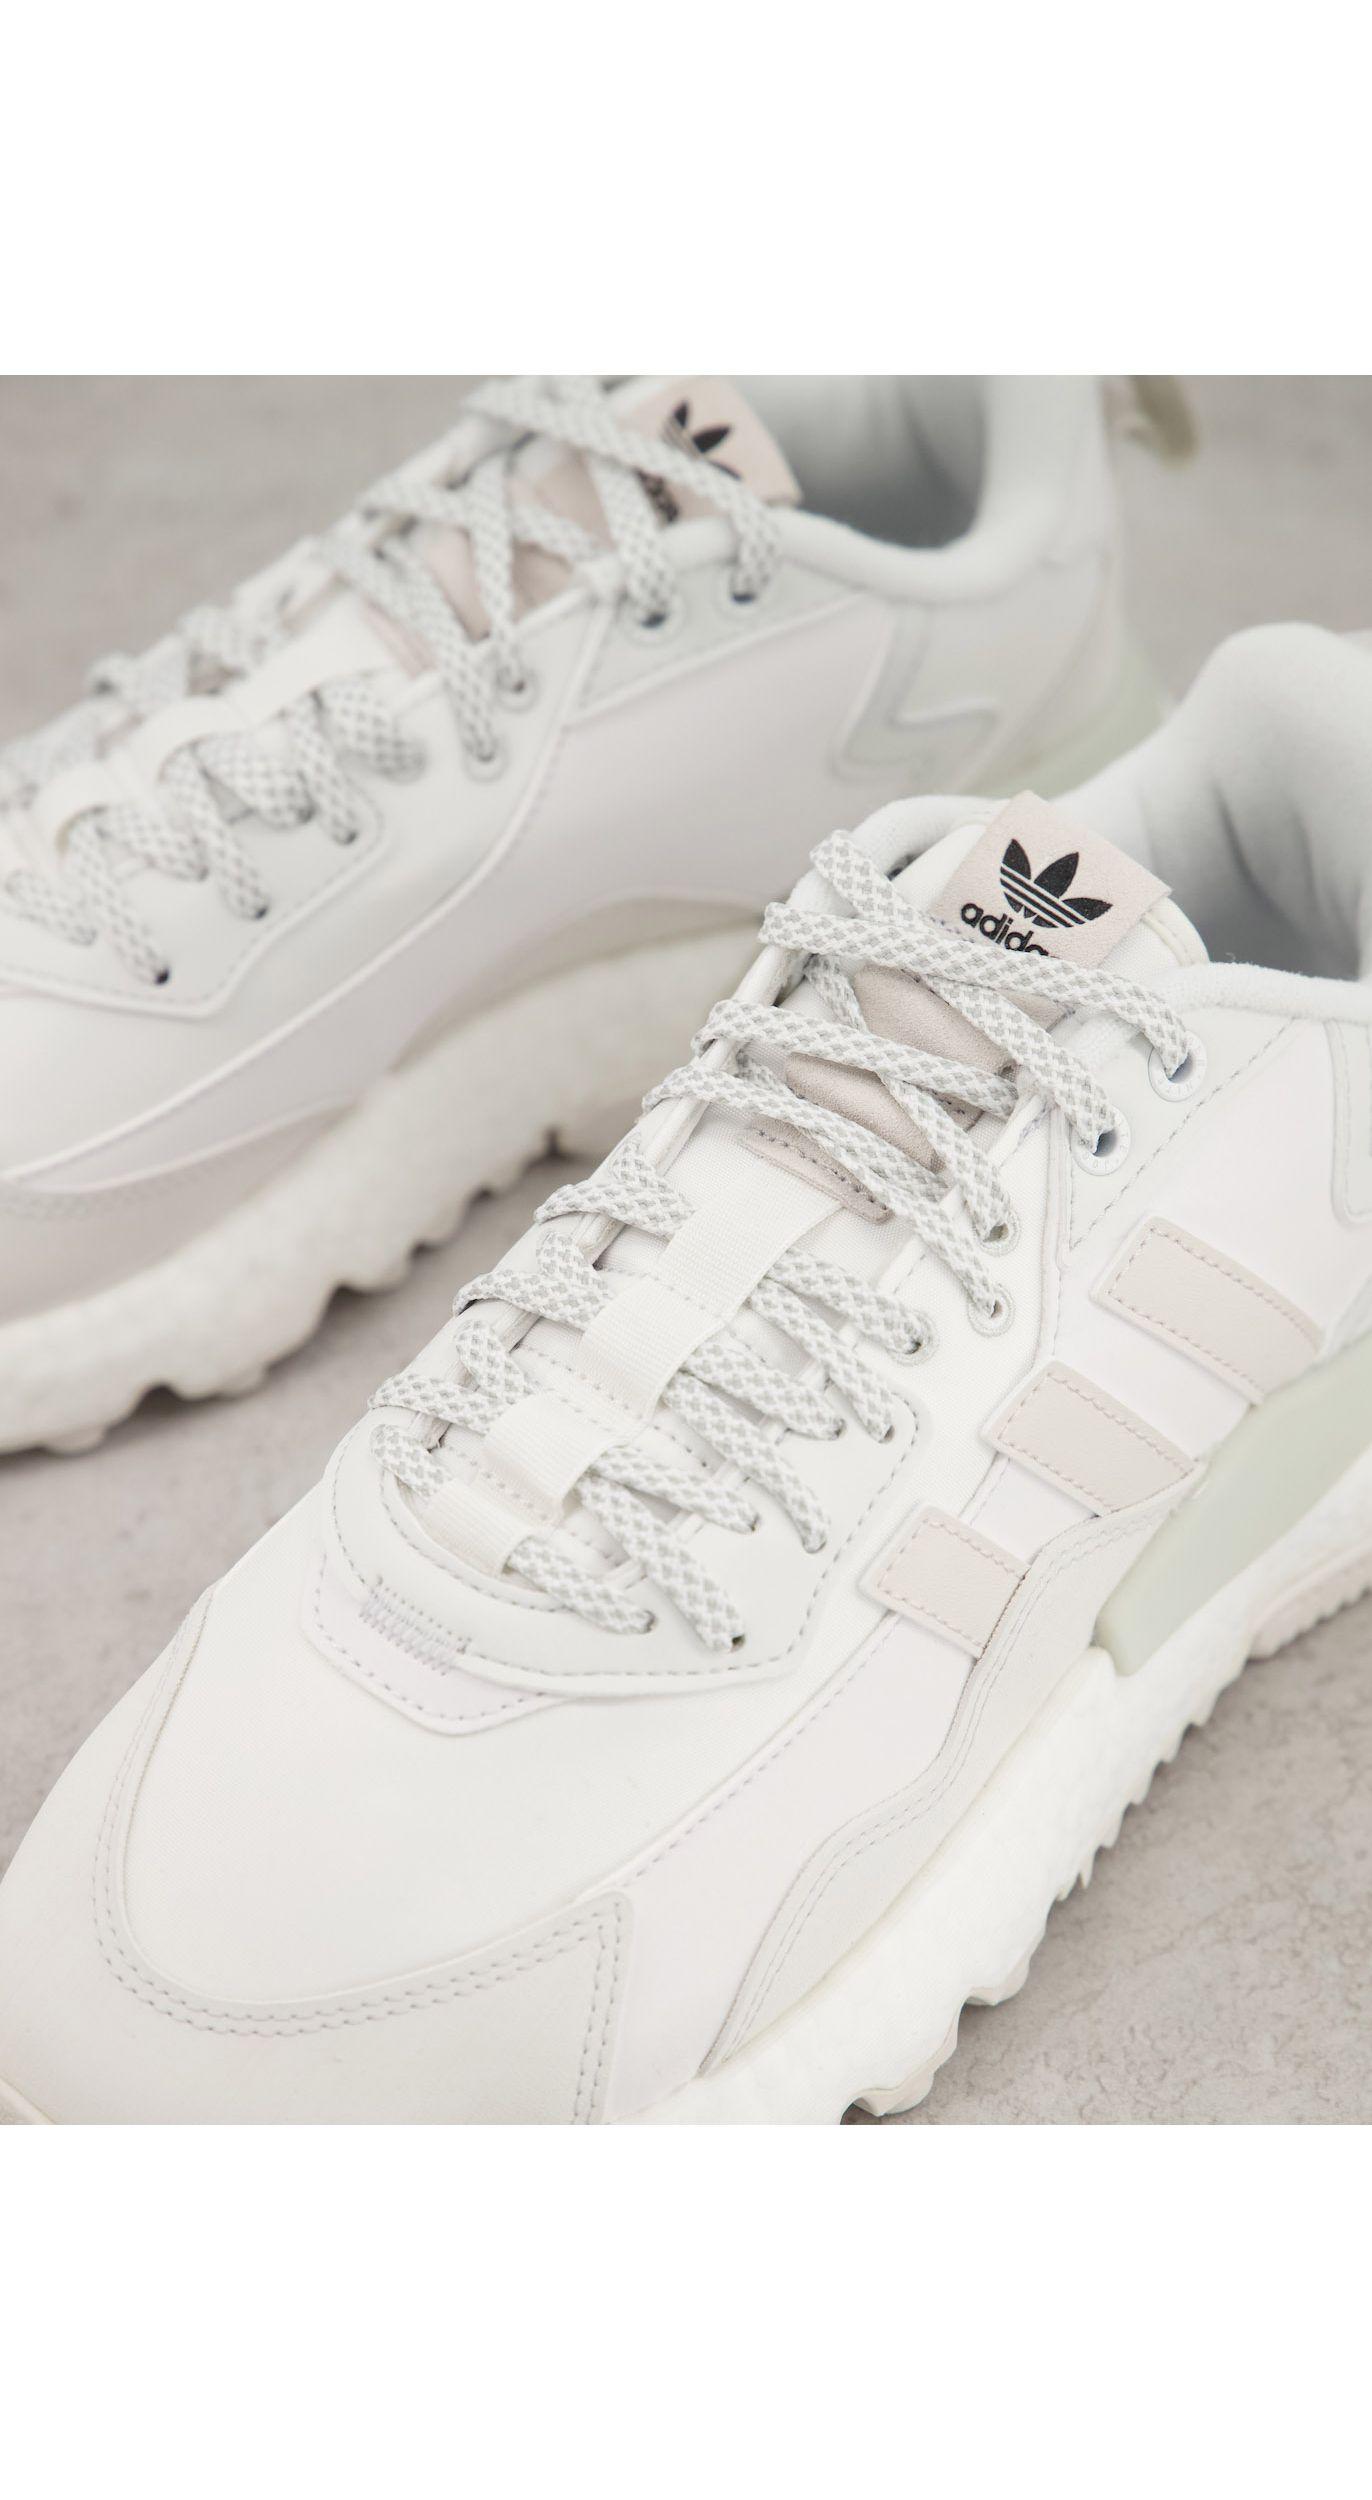 adidas Originals Nite jogger Winter Sneakers in White Lyst